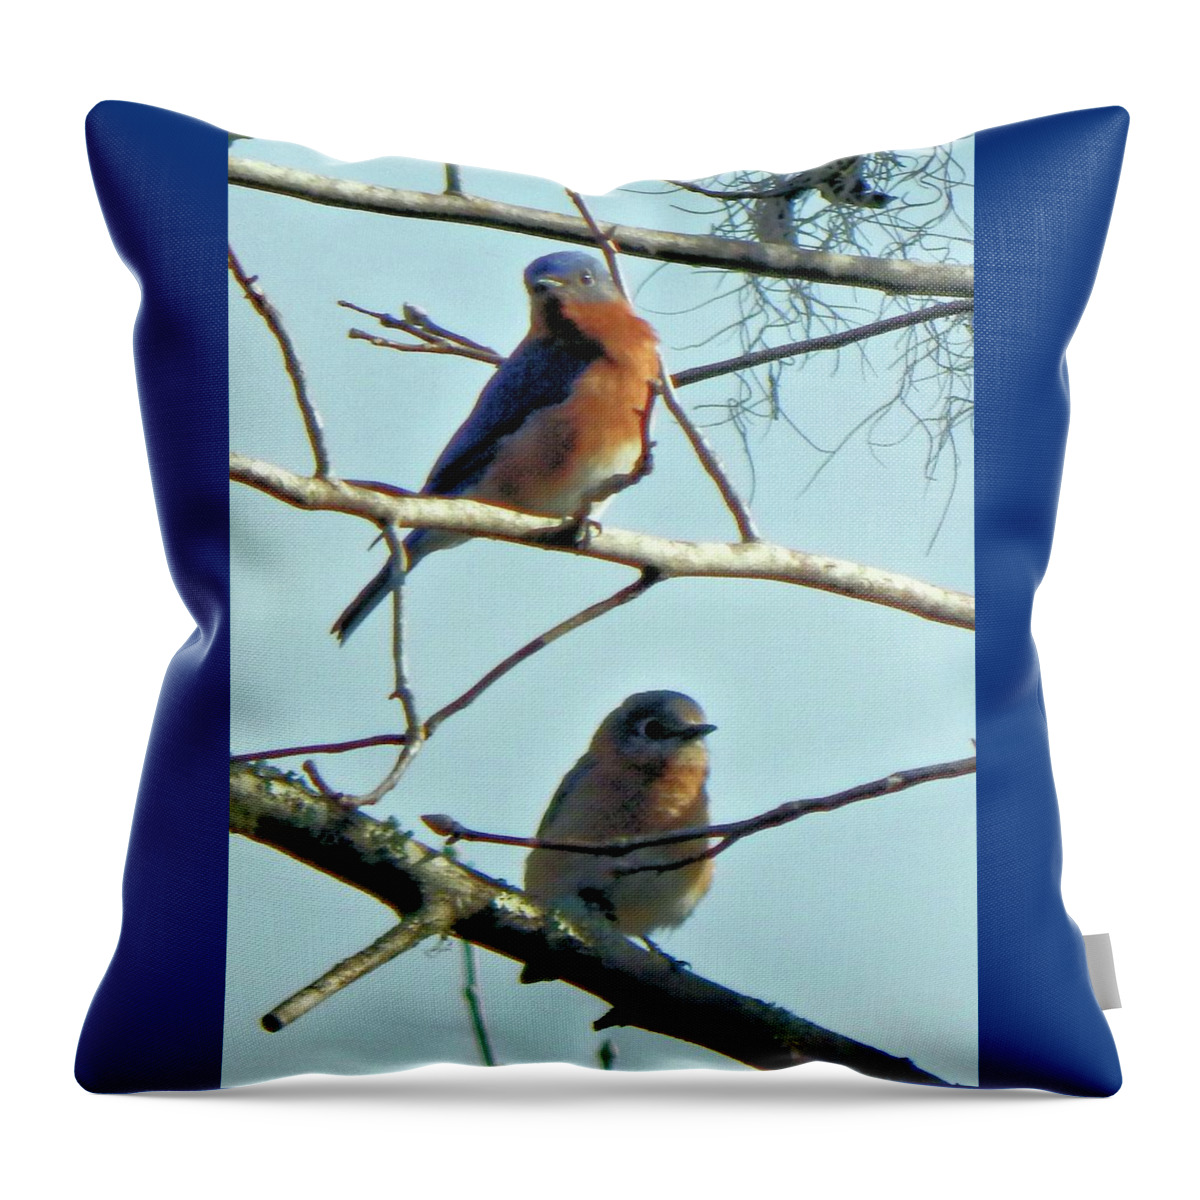 Birds Throw Pillow featuring the photograph Mr. and Mrs. Bluebird by Karen Stansberry